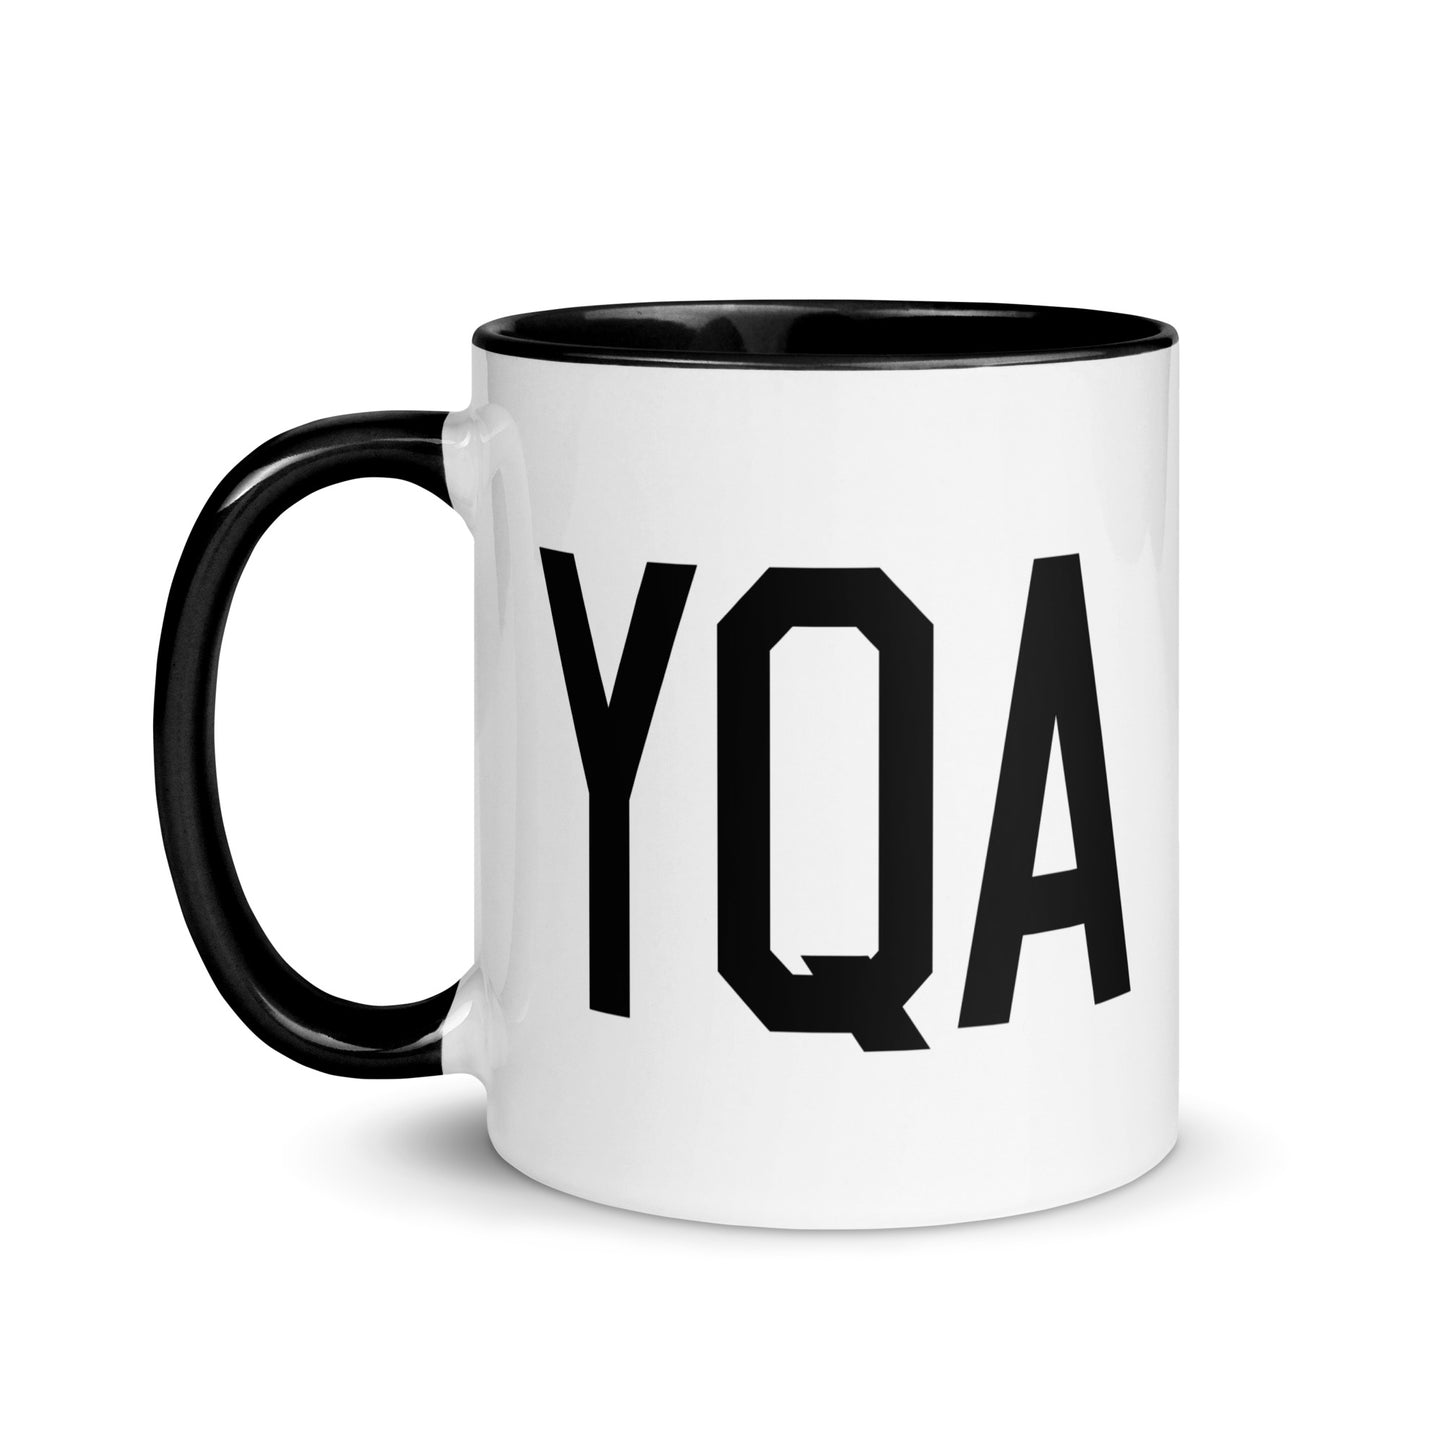 Aviation-Theme Coffee Mug - Black • YQA Muskoka • YHM Designs - Image 03